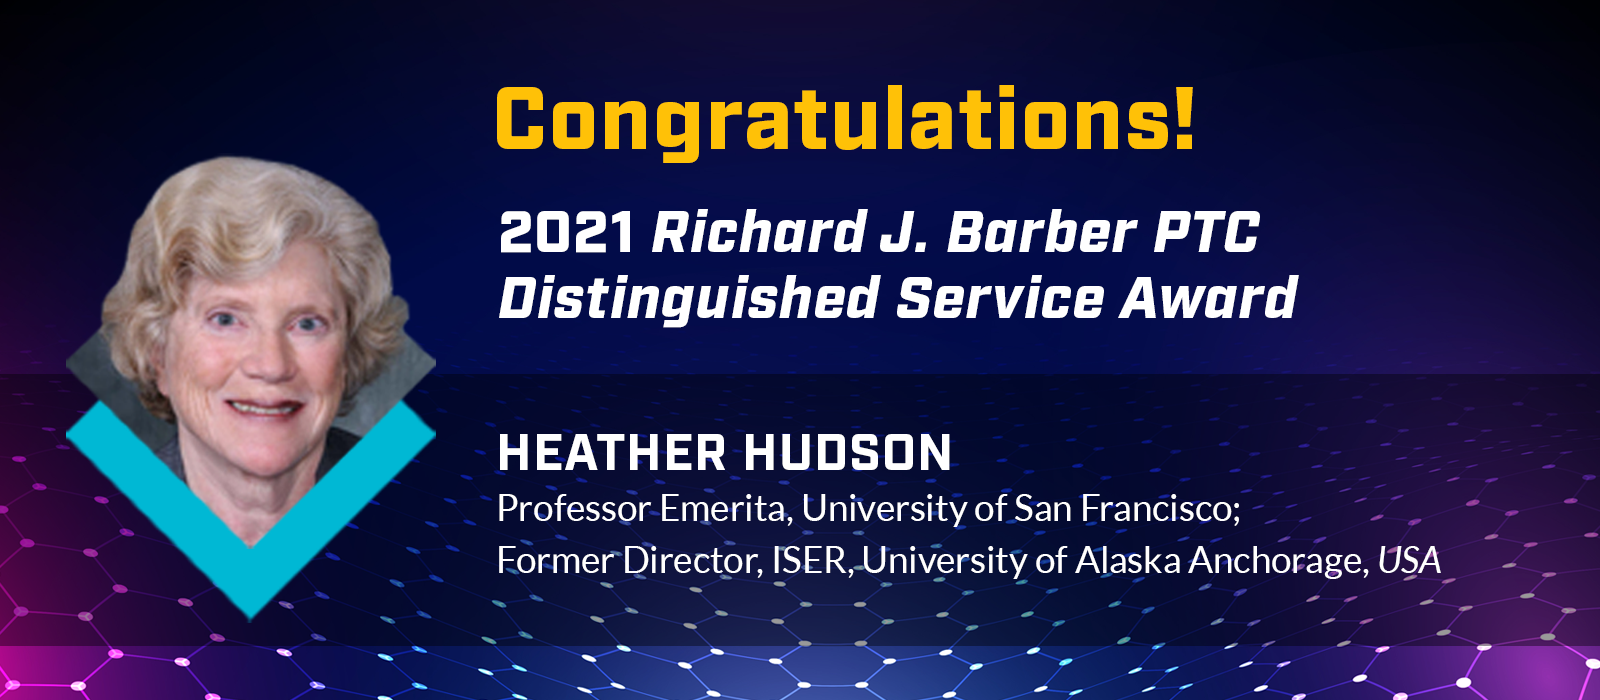 Heather Hudson, 2021 Richard J. Barber PTC Distinguished Service Award Recipient